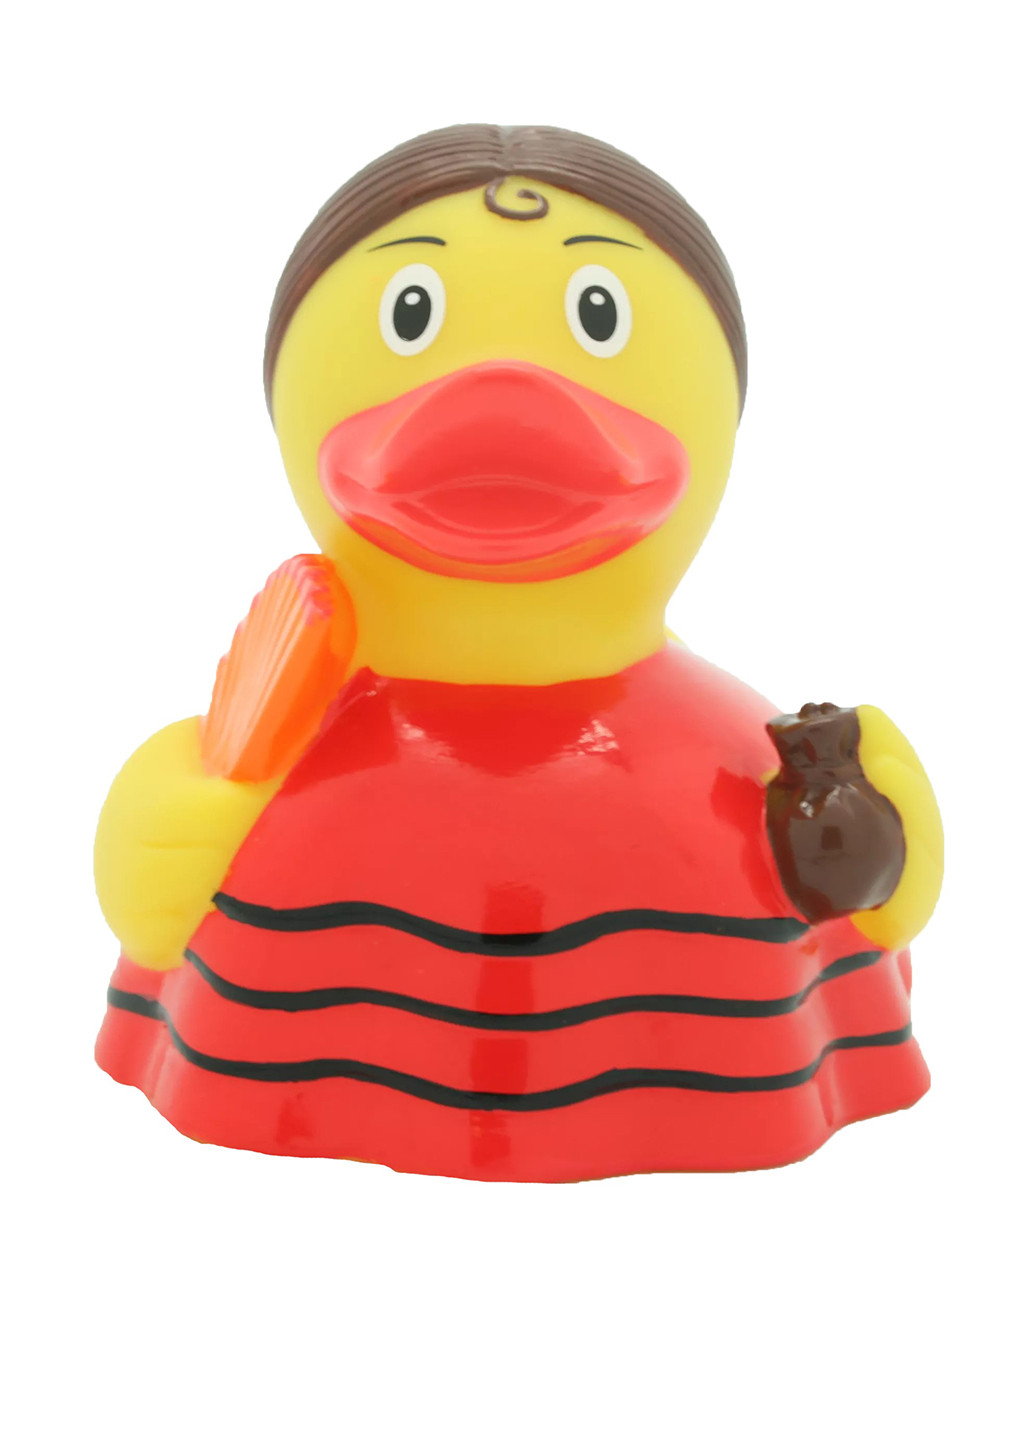 Игрушка для купания Утка Танцовщица Фламенко, 8,5x8,5x7,5 см Funny Ducks (250618842)